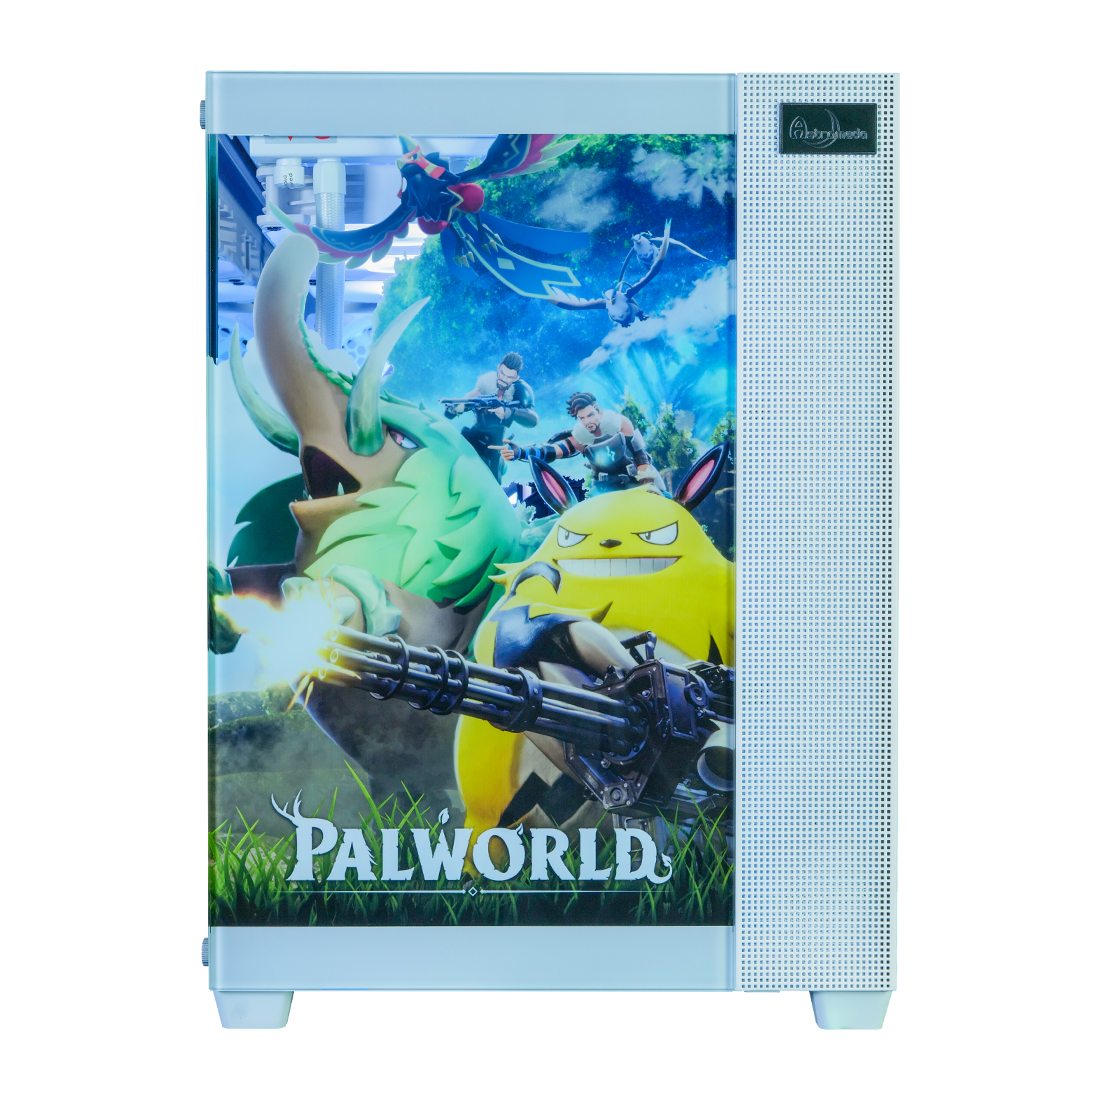 Palworld×Astromeda Collaboration PC [Flagship]